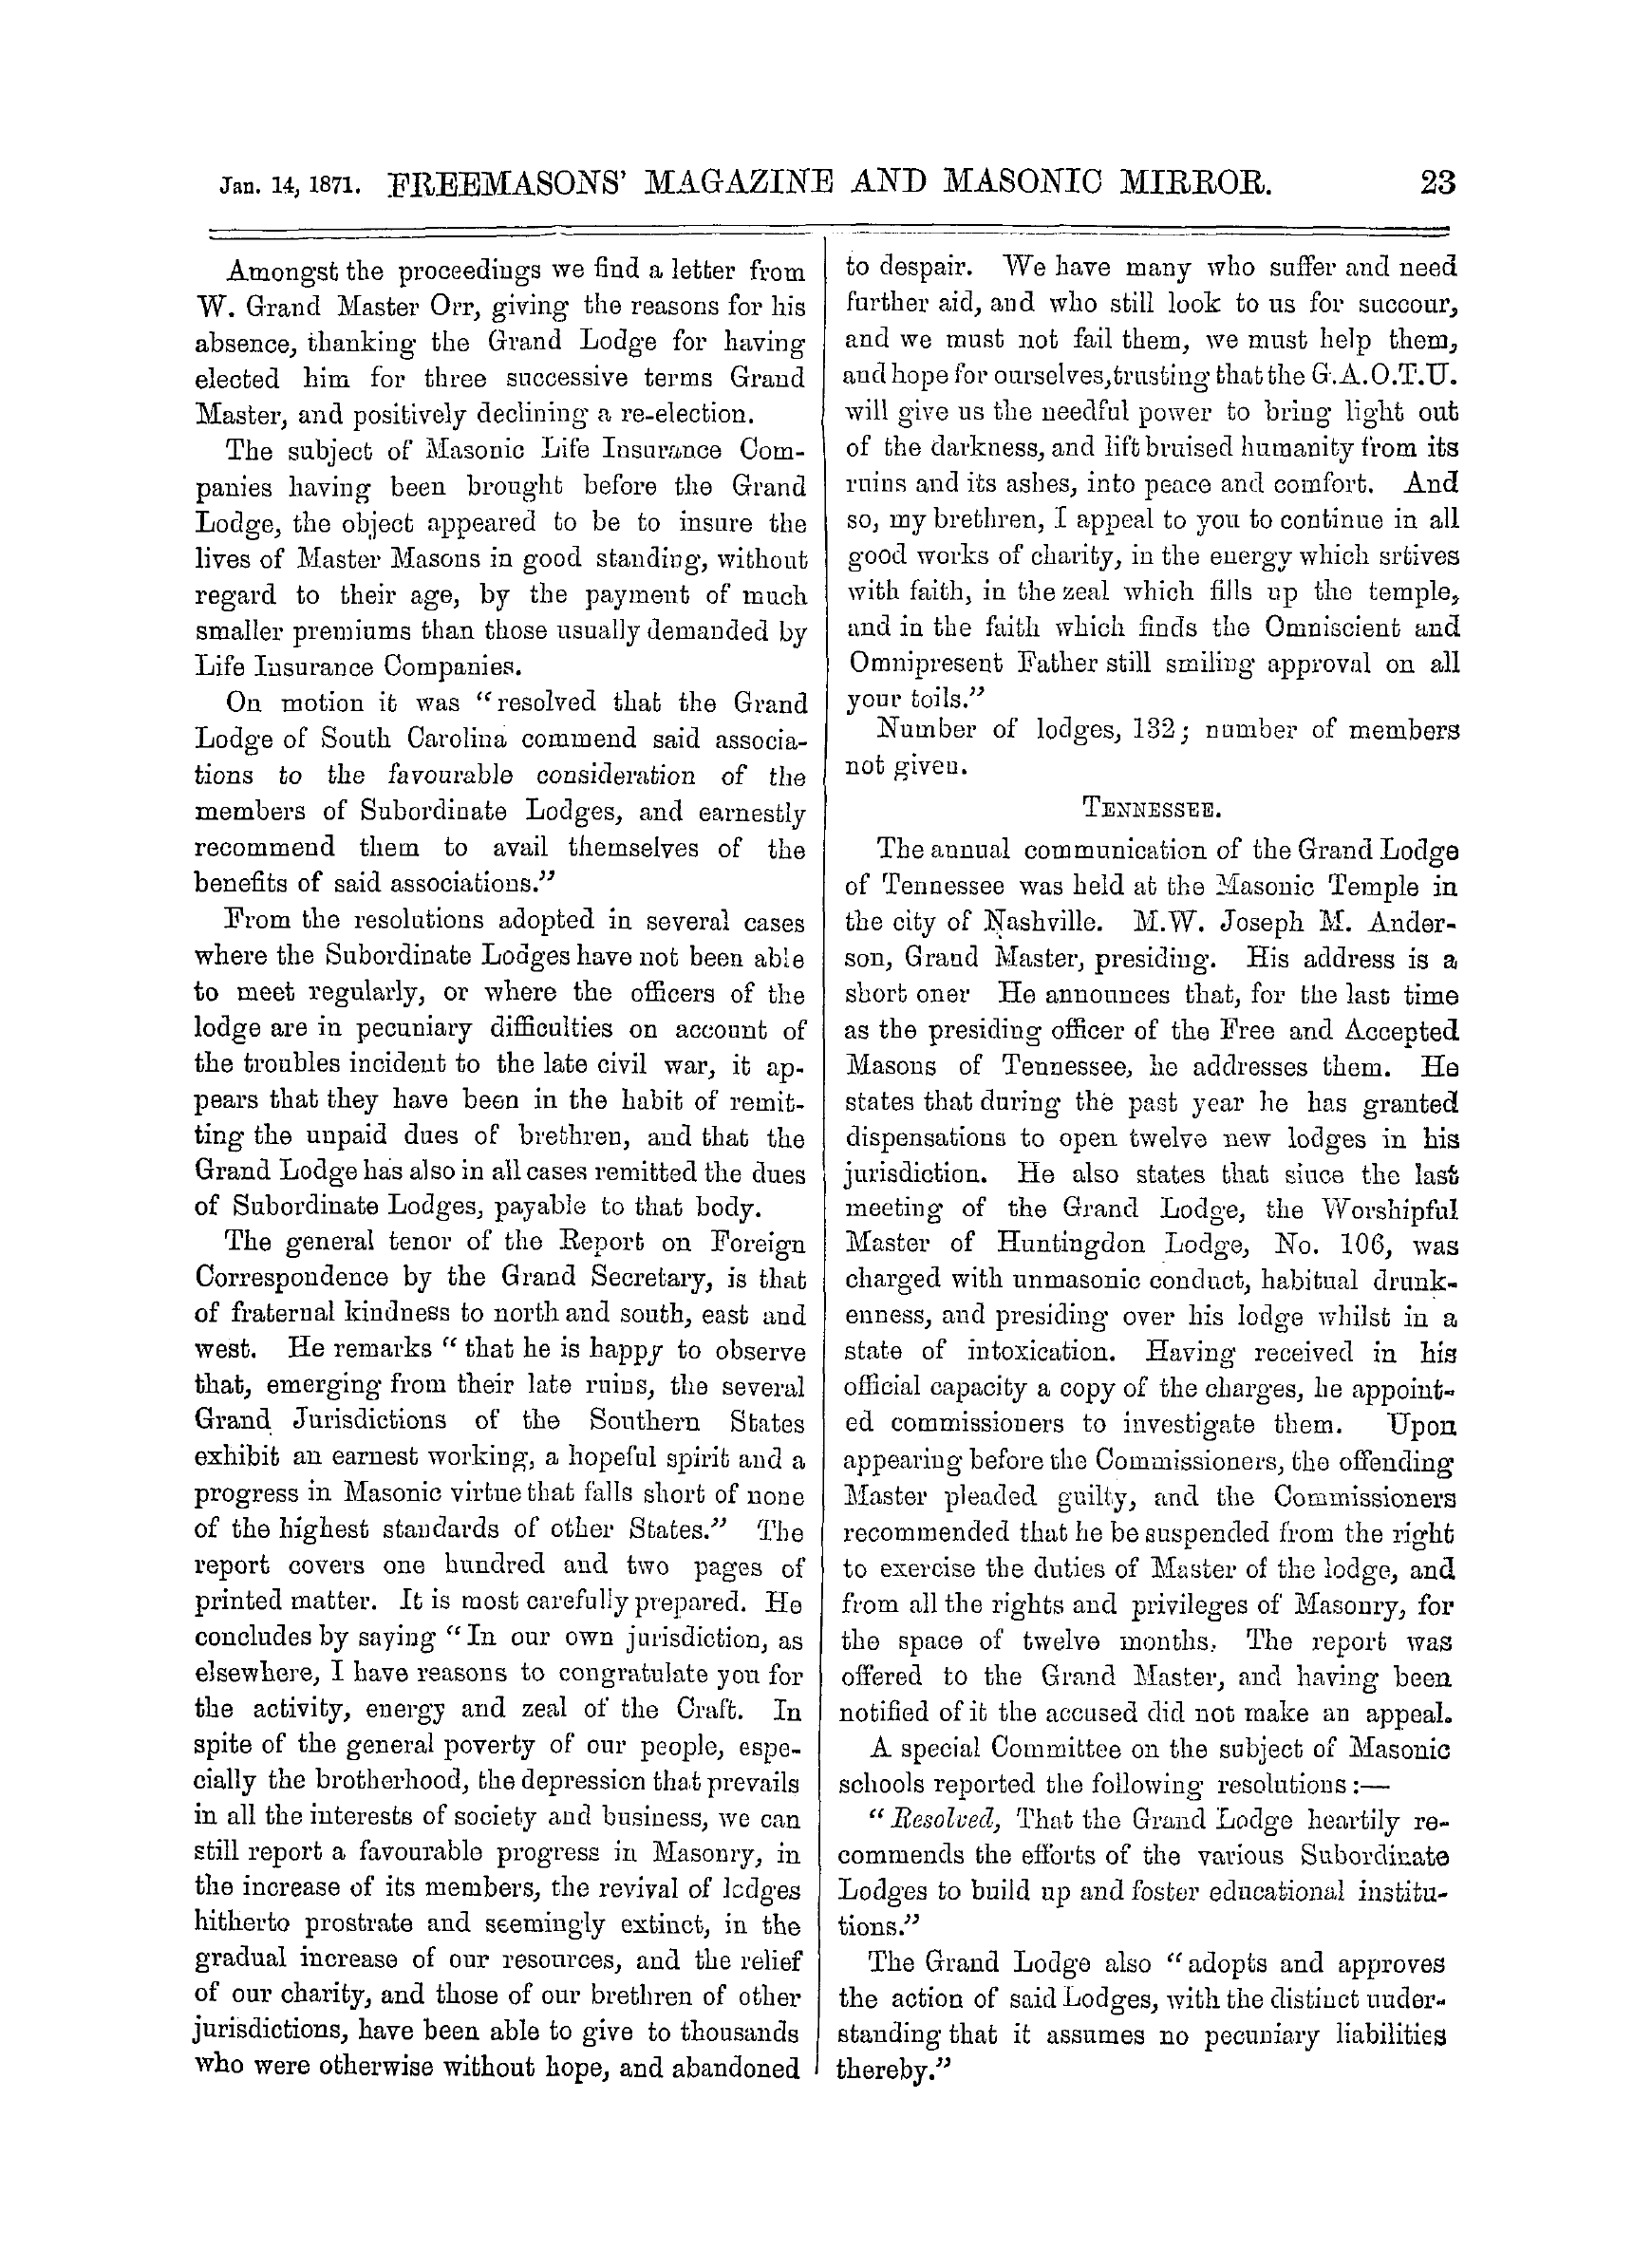 The Freemasons' Monthly Magazine: 1871-01-14 - Notes On American Freemasonry.